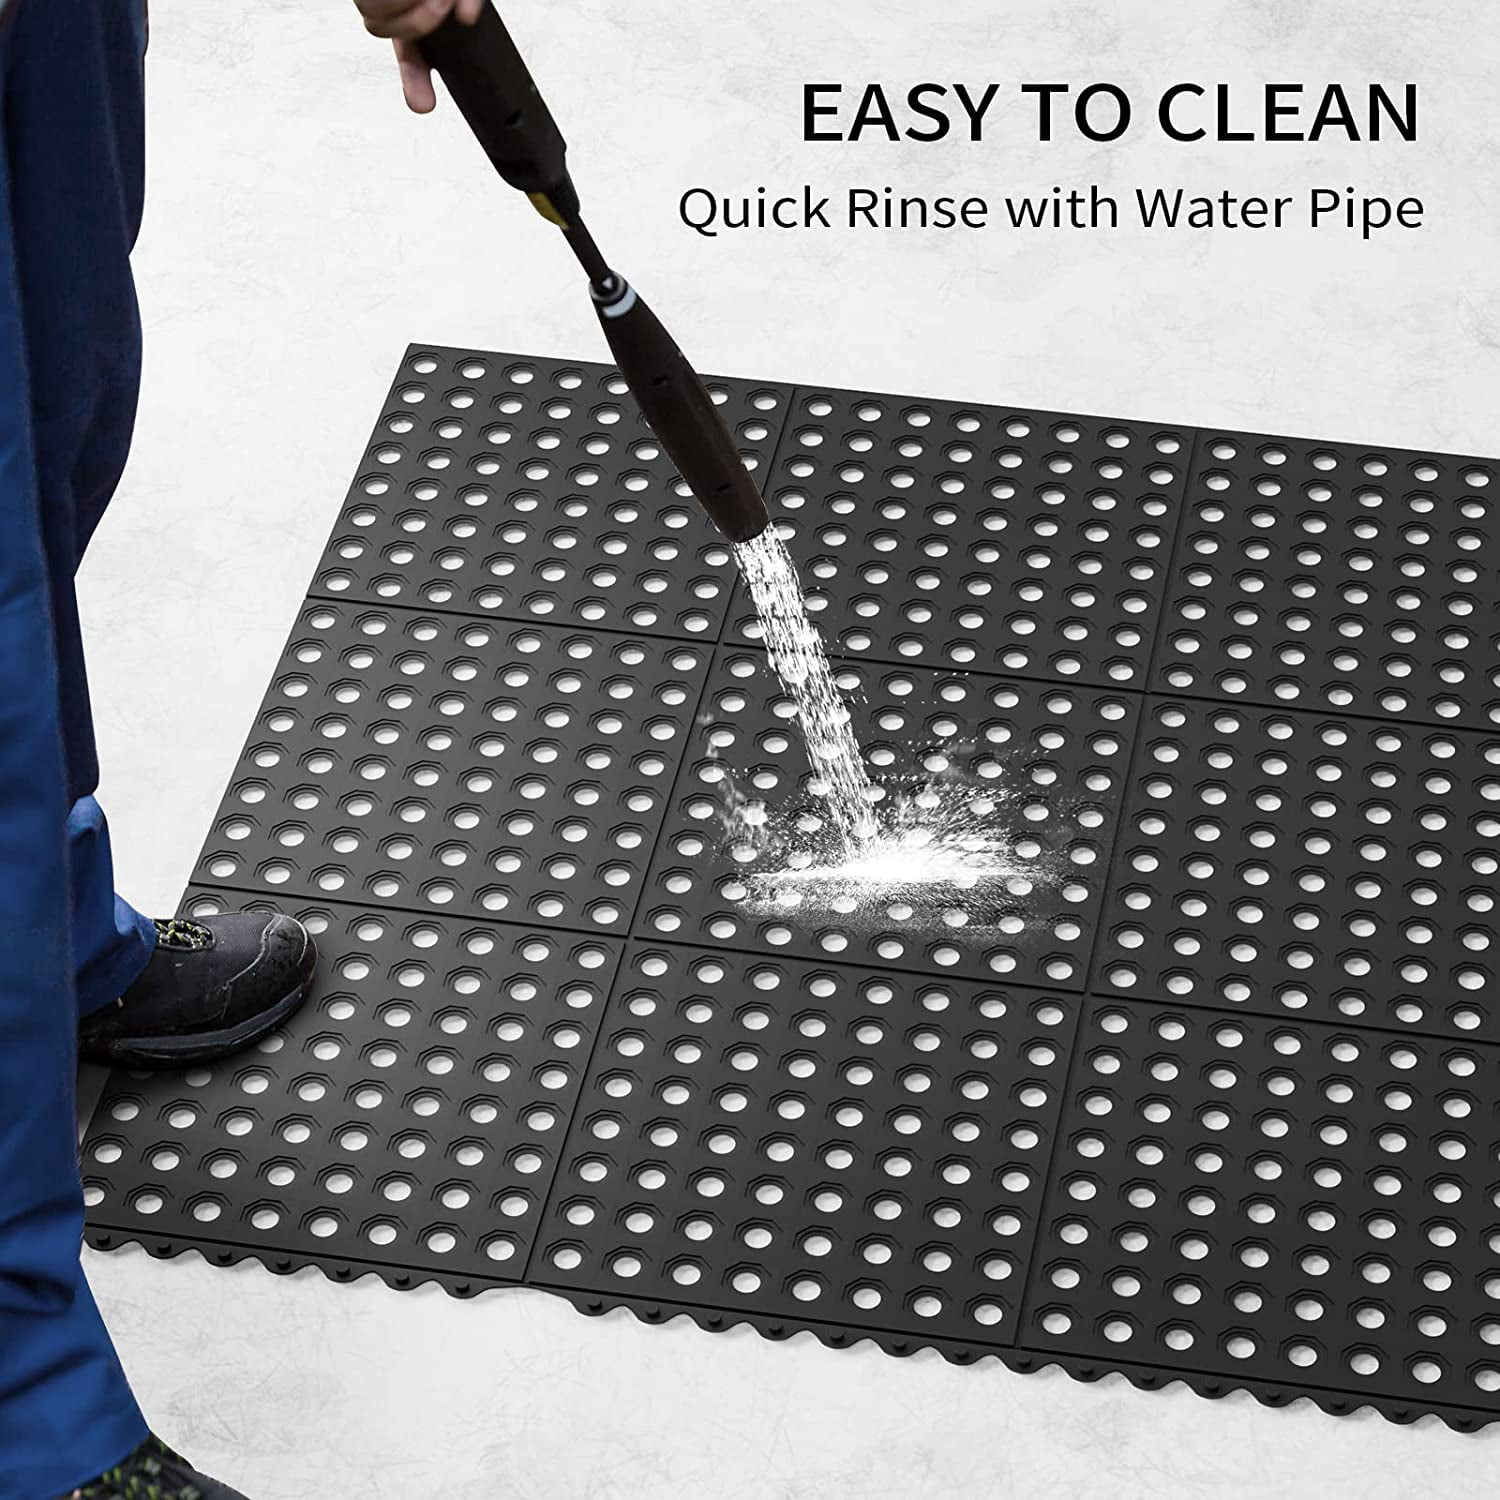 ROVSUN Rubber Floor Mat with Holes, 36''x 60'' Anti-Fatigue/Non-Slip  Drainage Mat, for Industrial Kitchen Restaurant Bar Bathroom Utility Garage  Pool